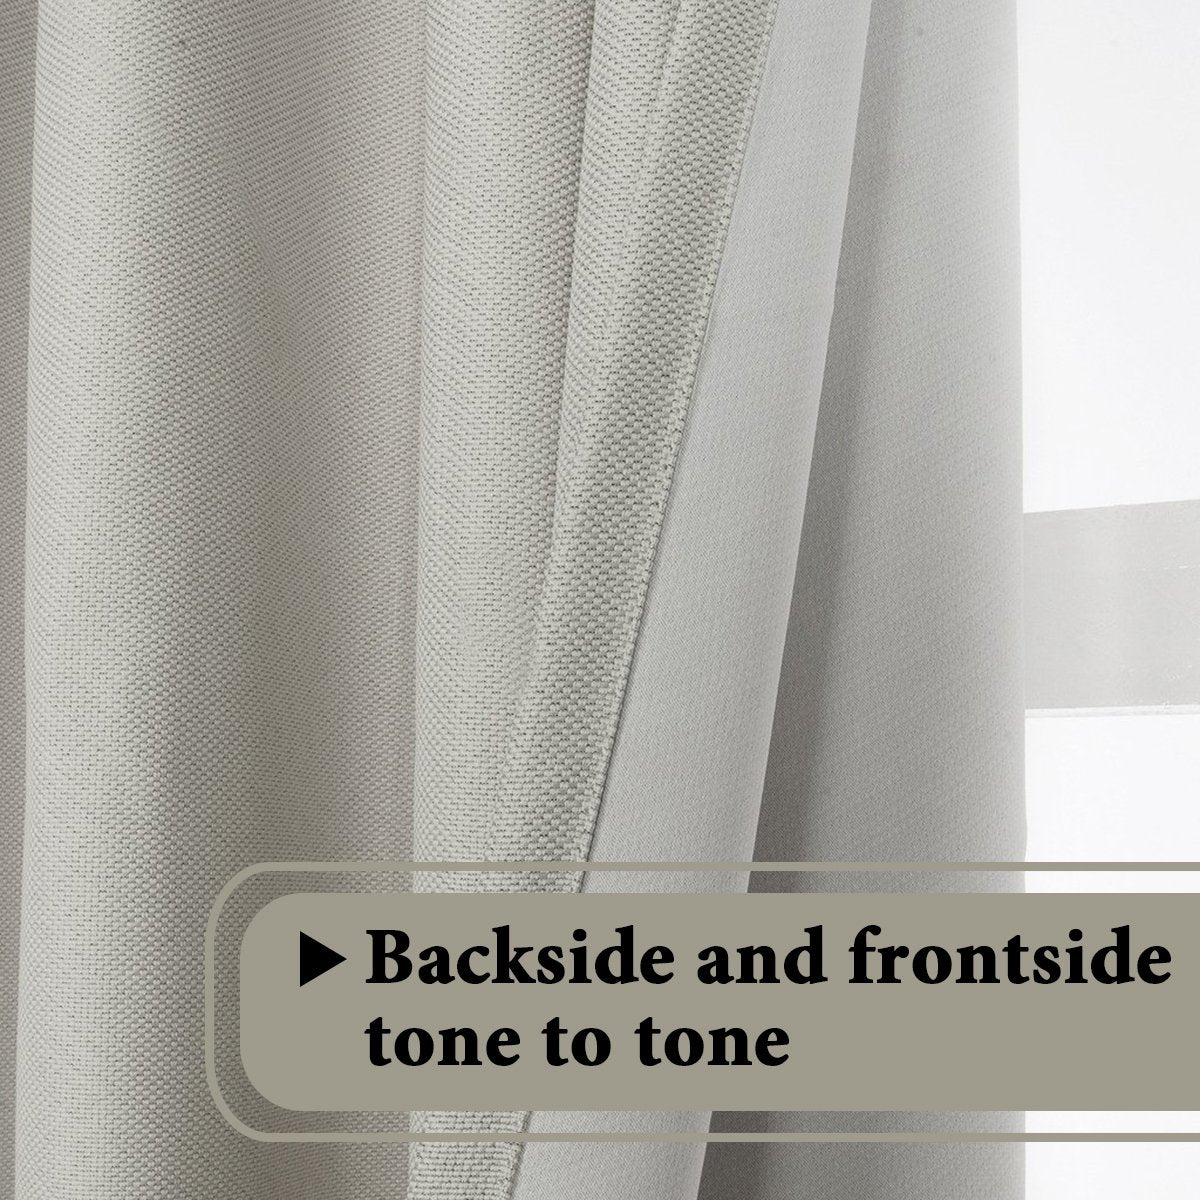 PrimeBeau Faux Linen Room Darkening Curtain , Sold by 1 Panel, Long